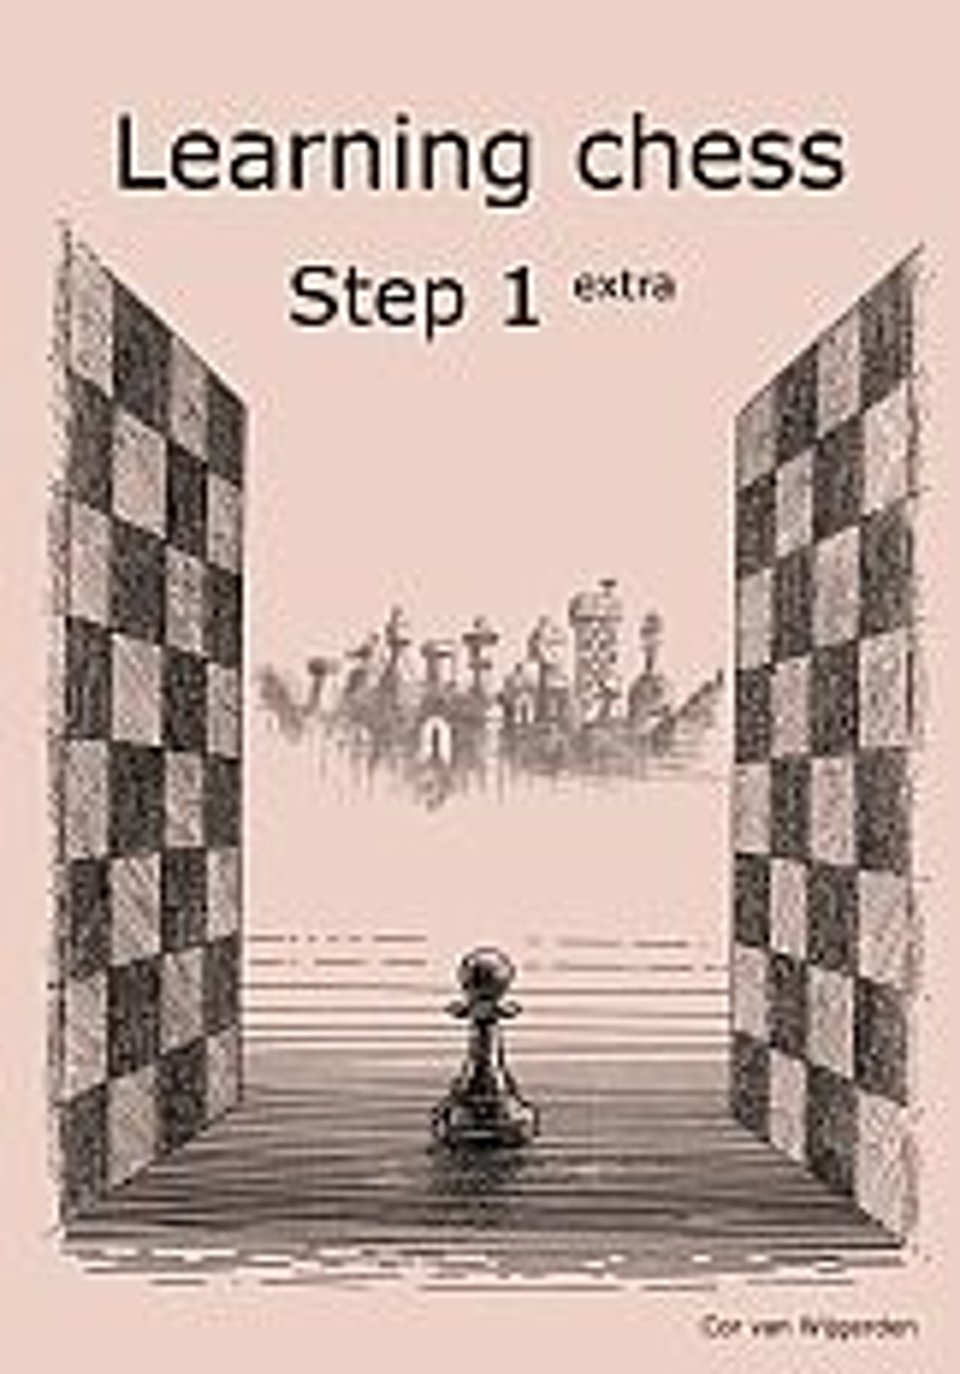 Learning chess step 1 extra, Brunia & van Wijgerden